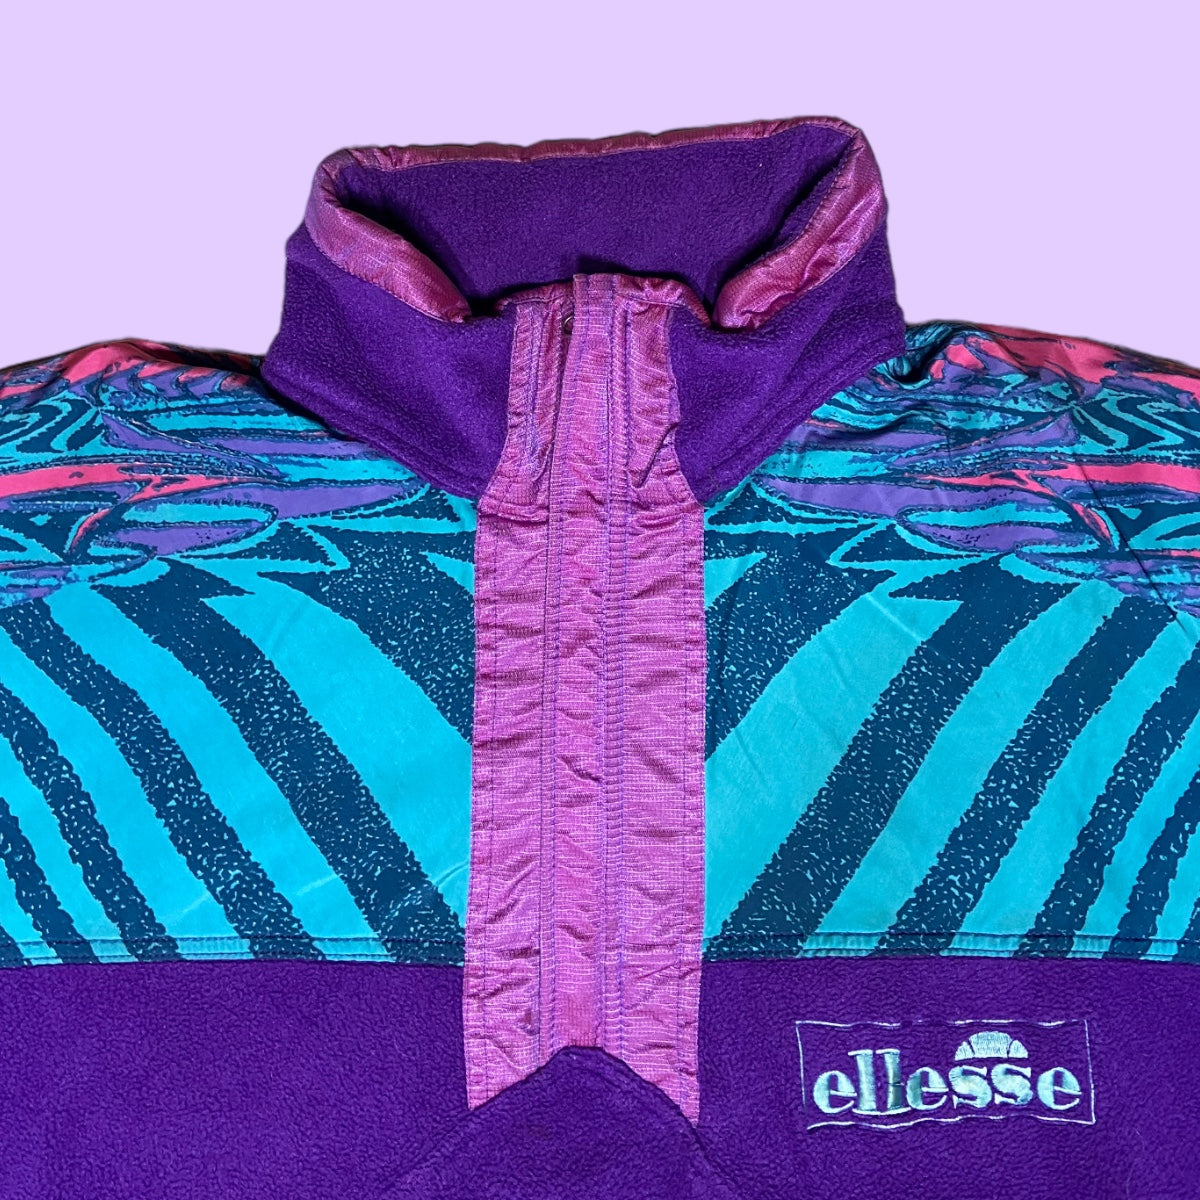 Vintage 80s Ellesse fleece - XL